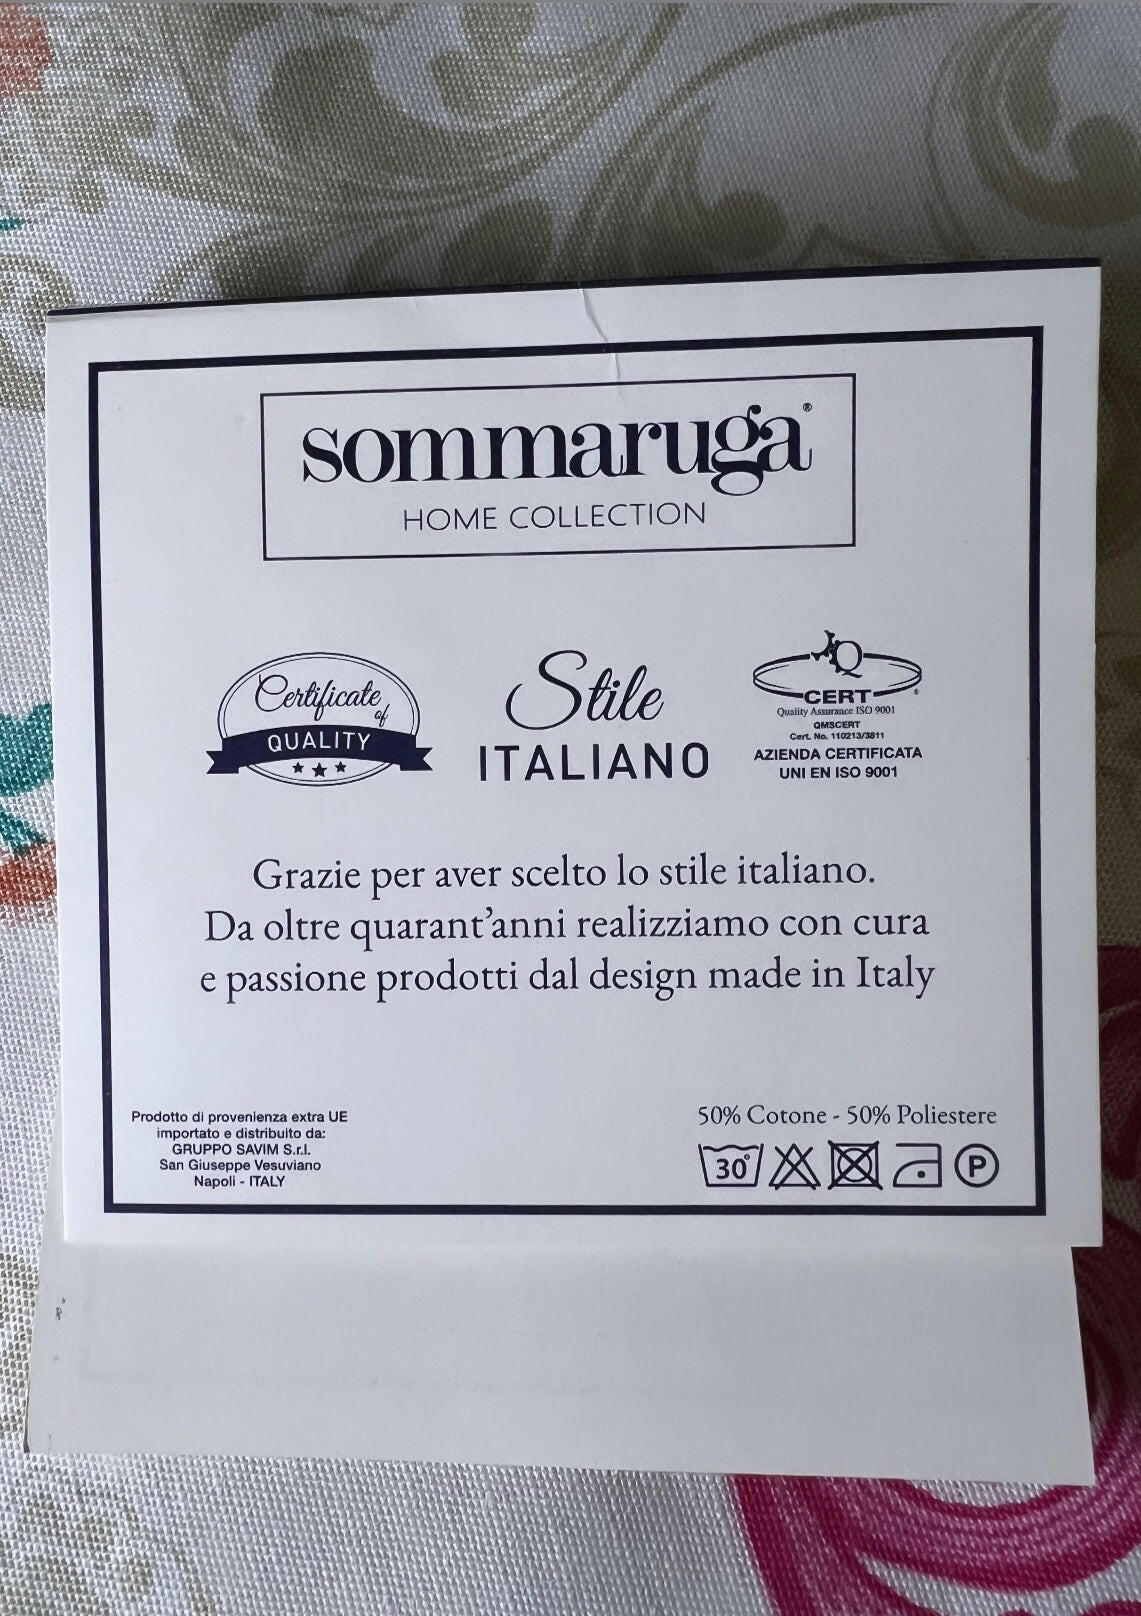 LIMITED EDITION* Sicilian Teste di Moro Tablecloth from Sicily.